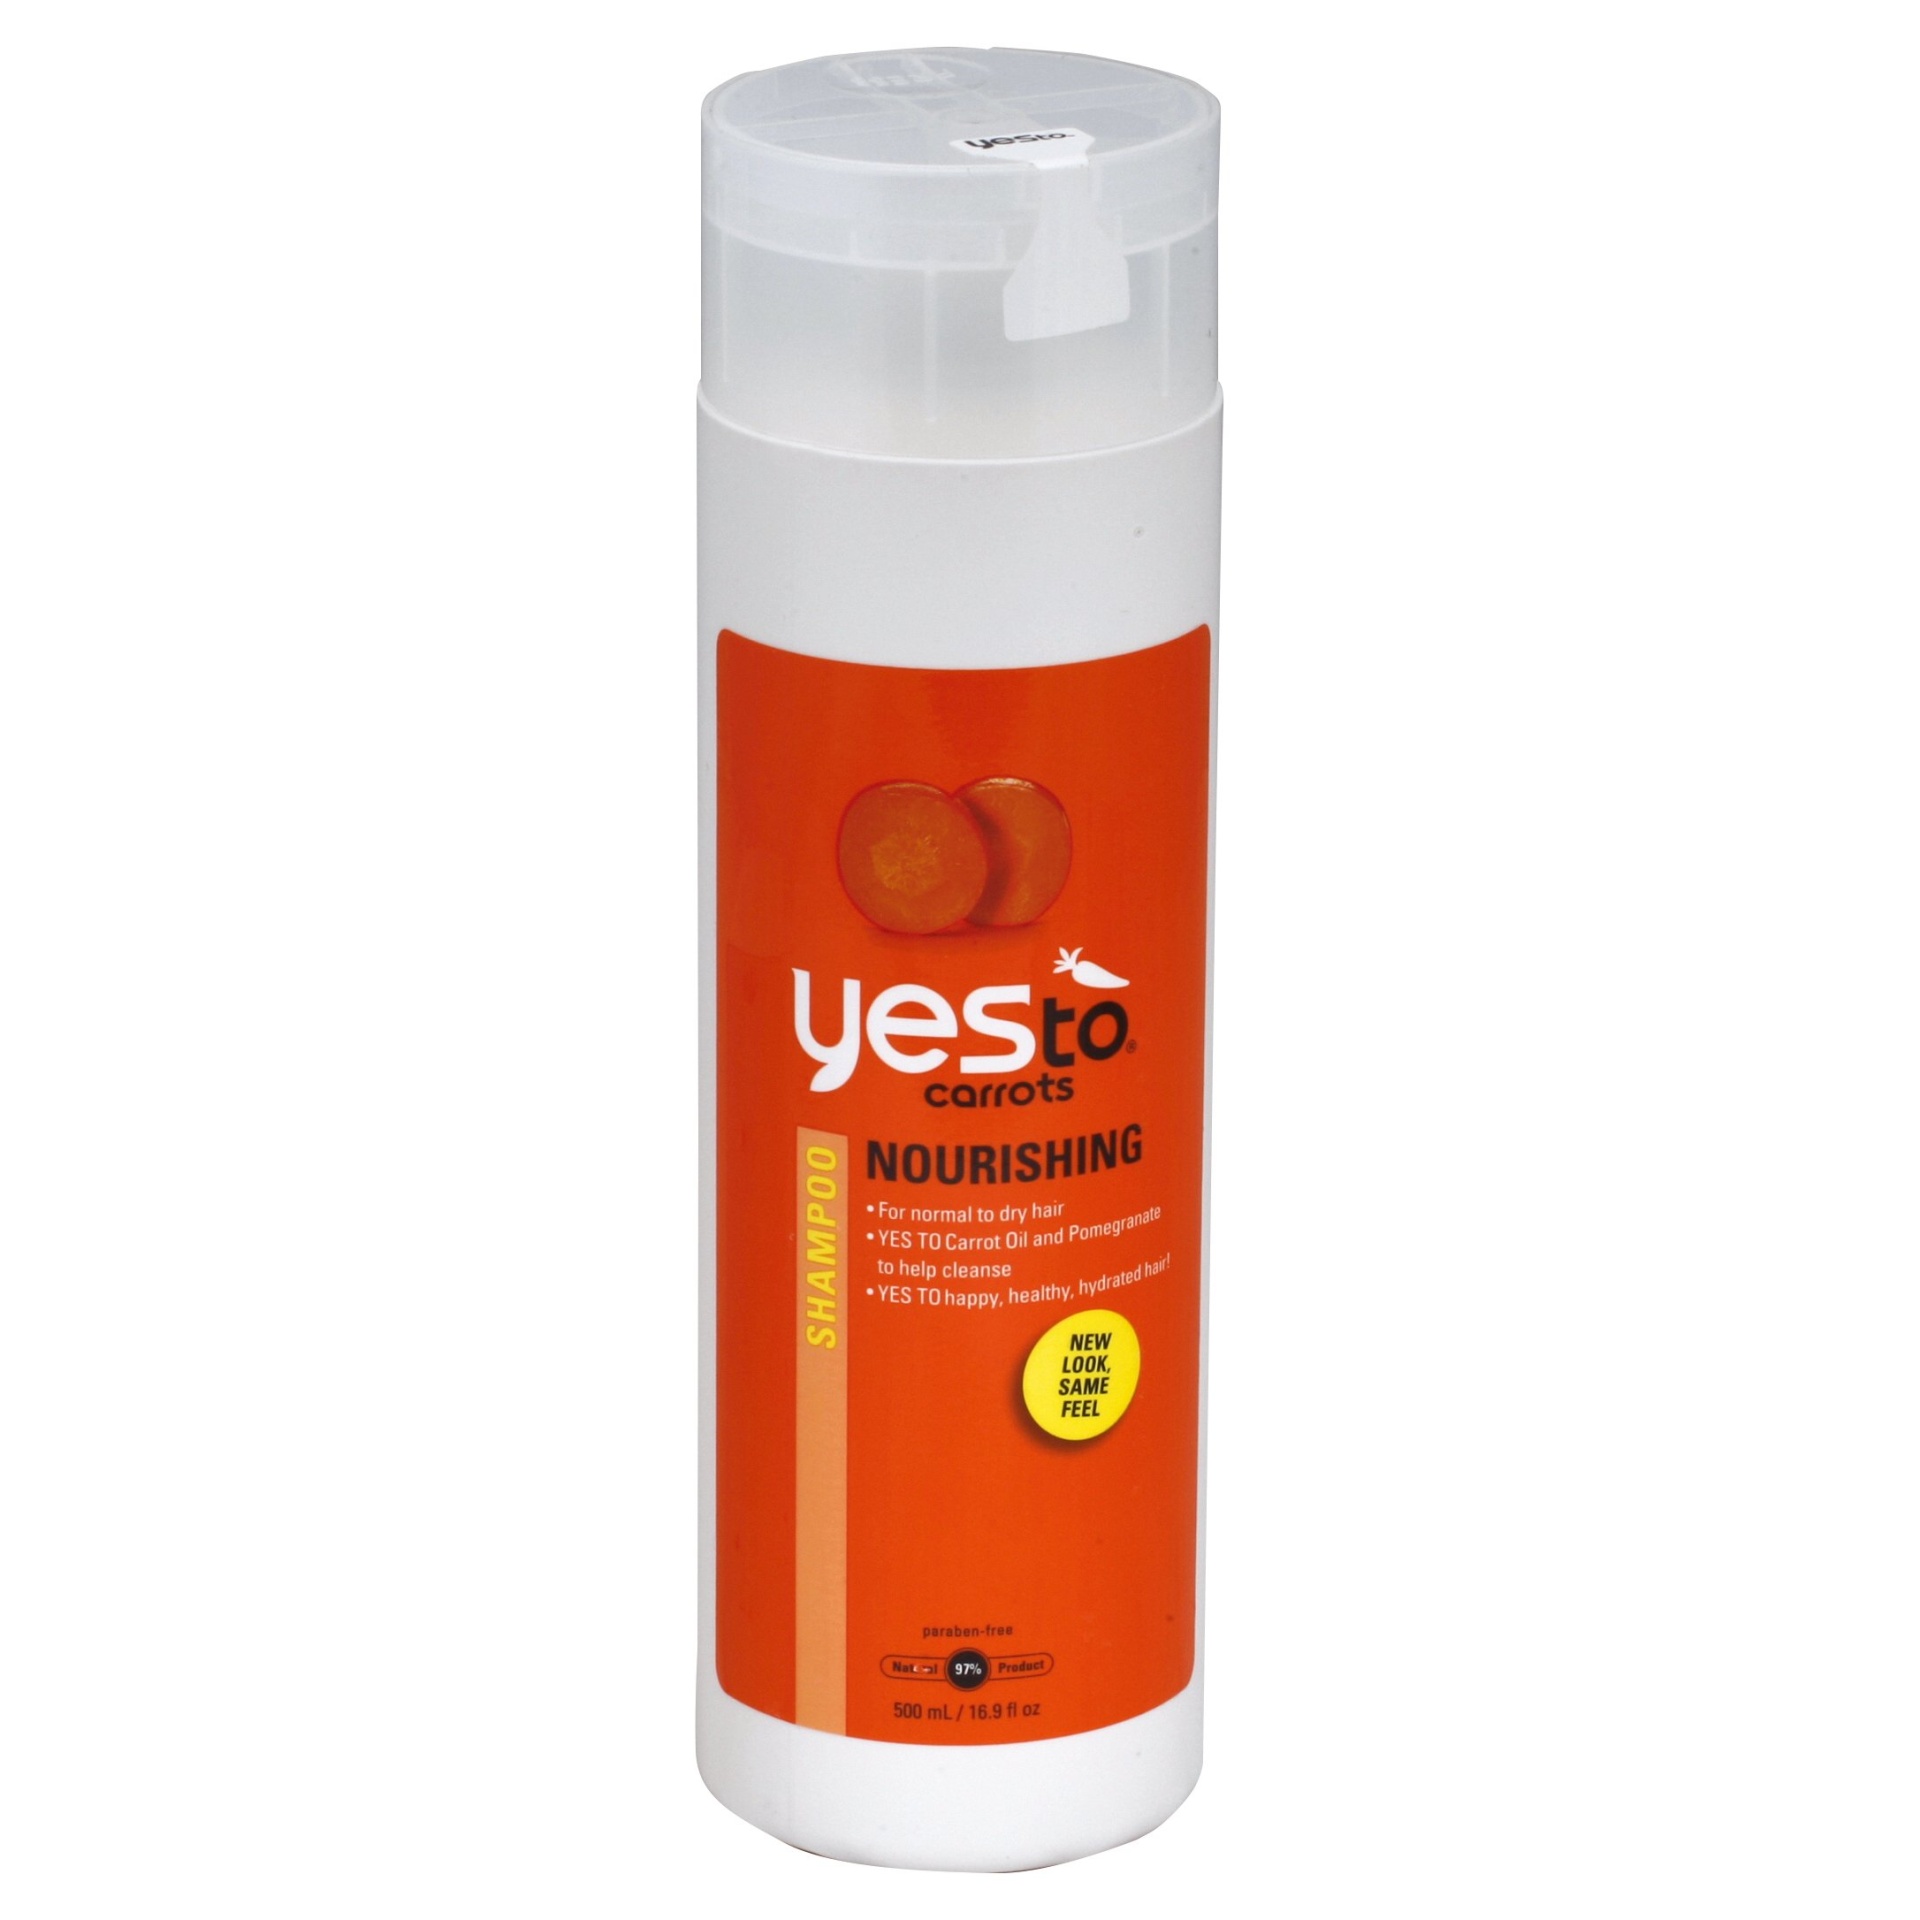 slide 1 of 1, Yes to Shampoo 16.9 oz, 16.9 fl oz